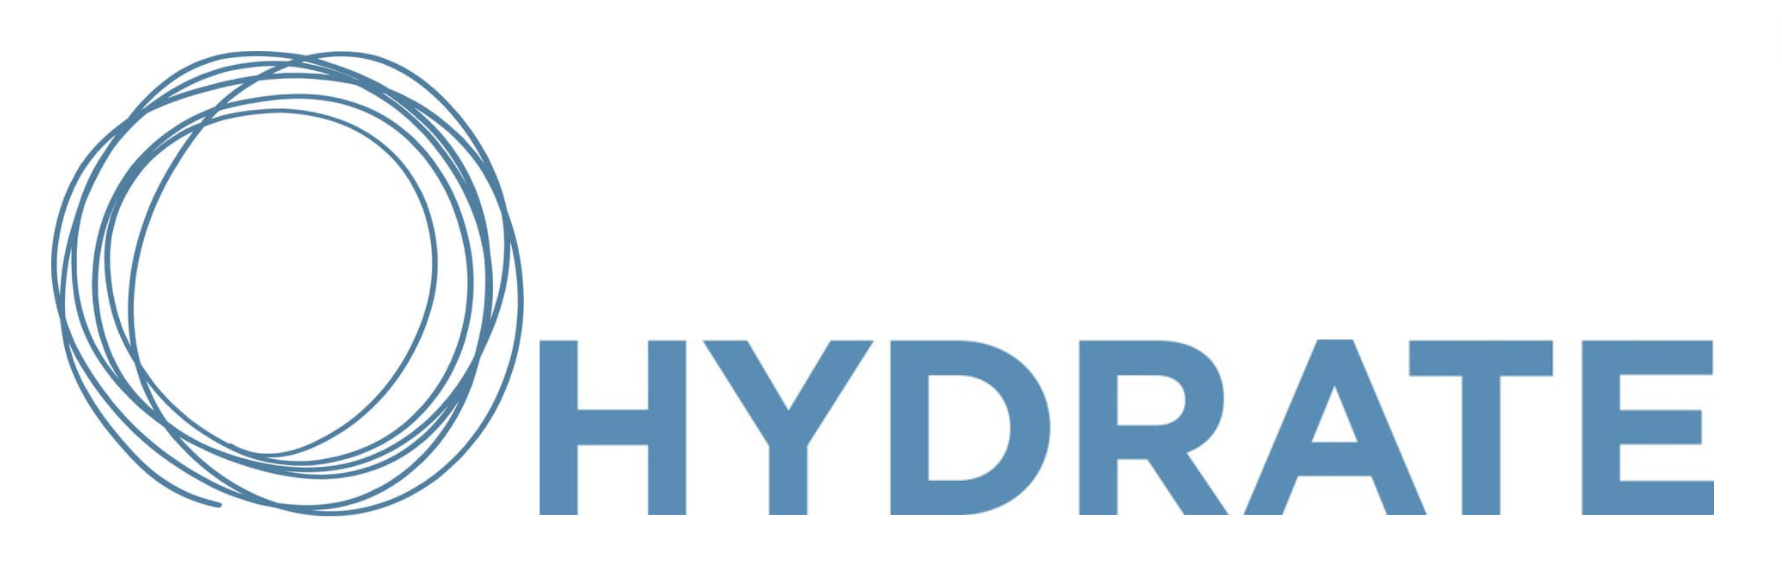 Hydrate Marketing logo